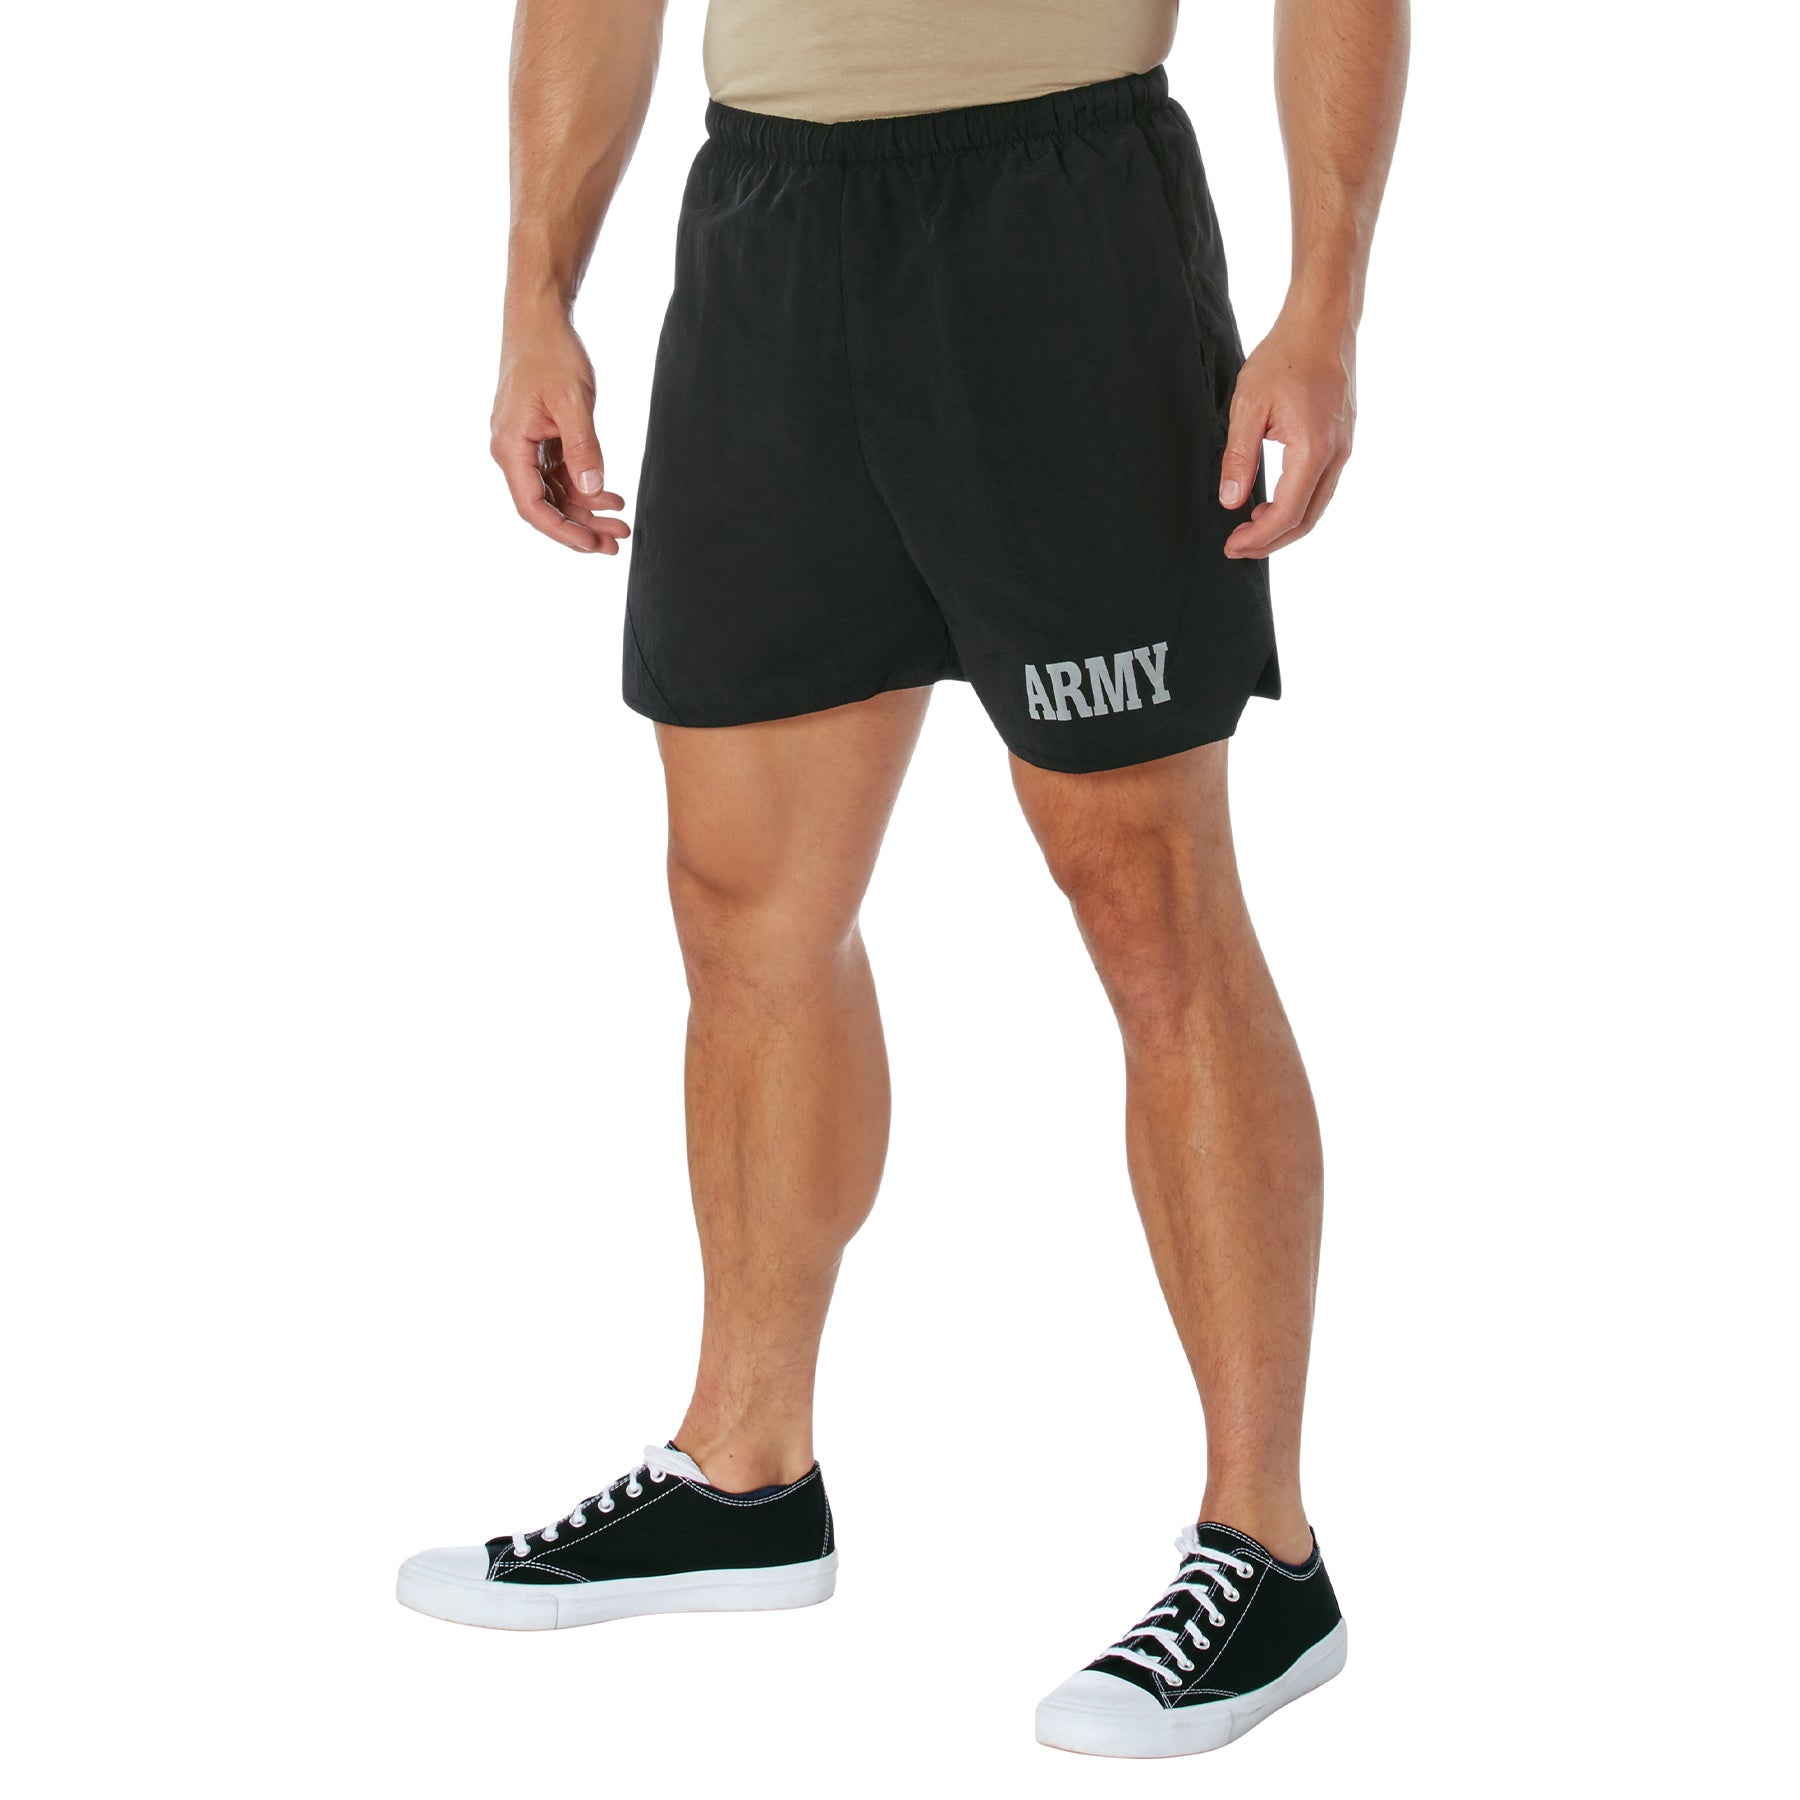 [Military] Nylon Army Physical Training Shorts